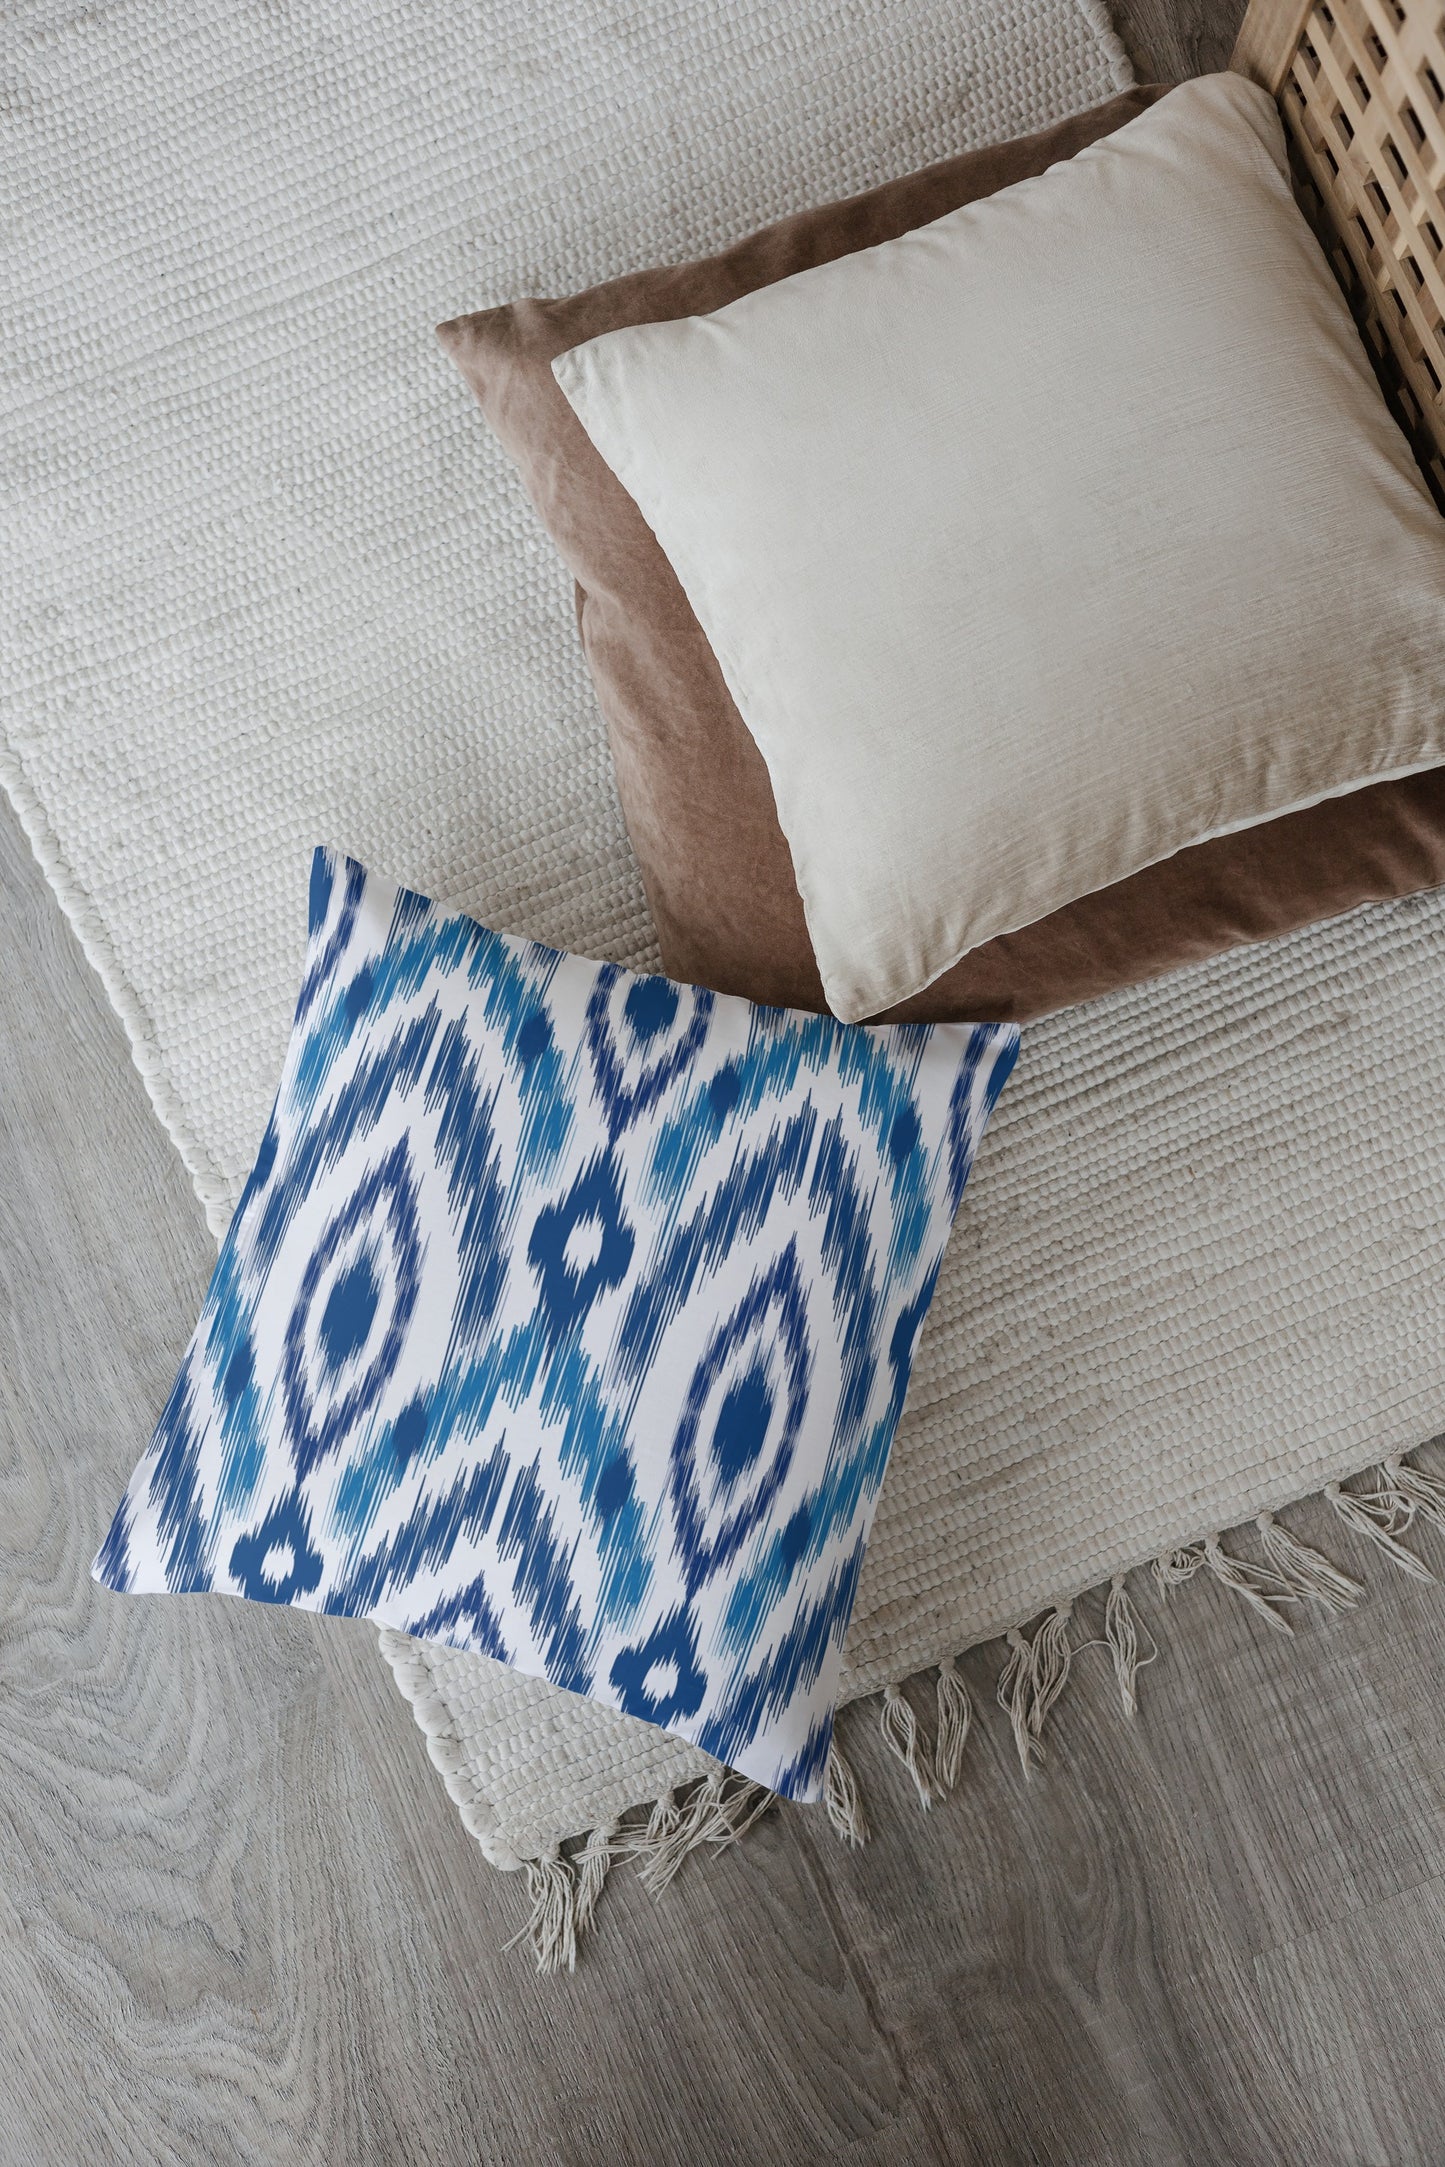 Hierro Outdoor Pillows Aqua Blue & White